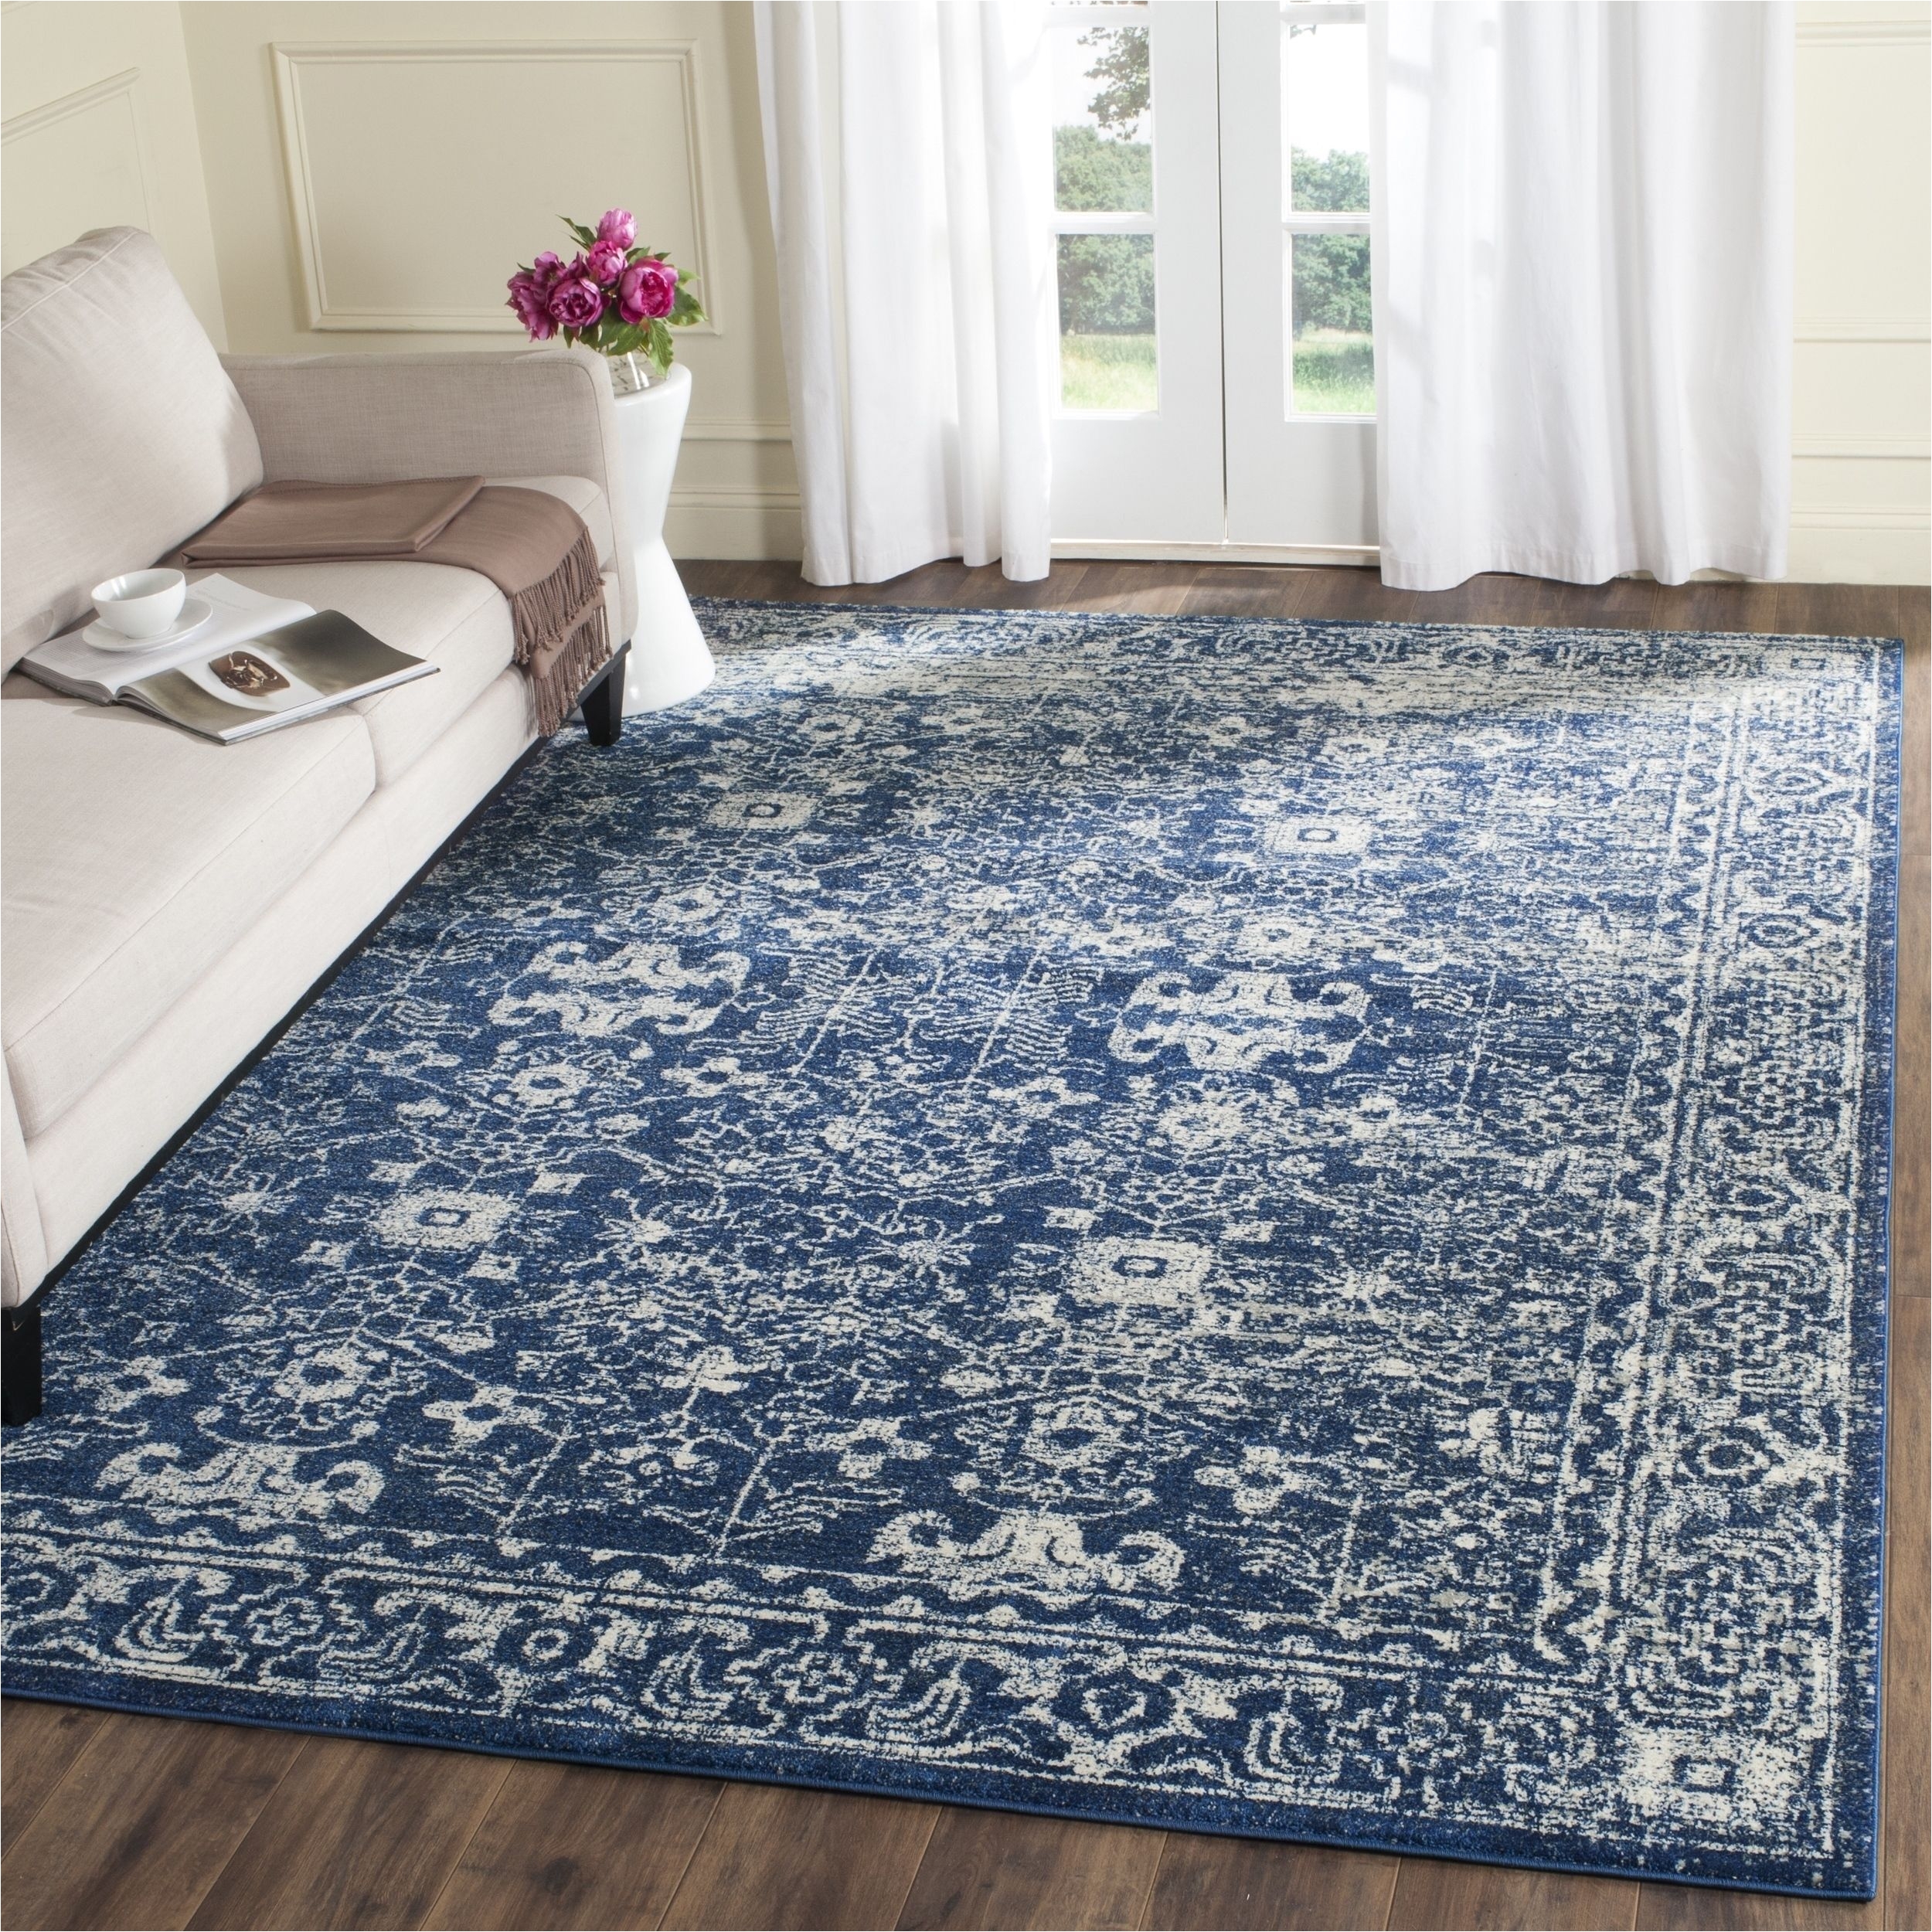 safavieh evoke vintage oriental navy blue ivory distressed rug 6 7 square evk270a 7sq size 6